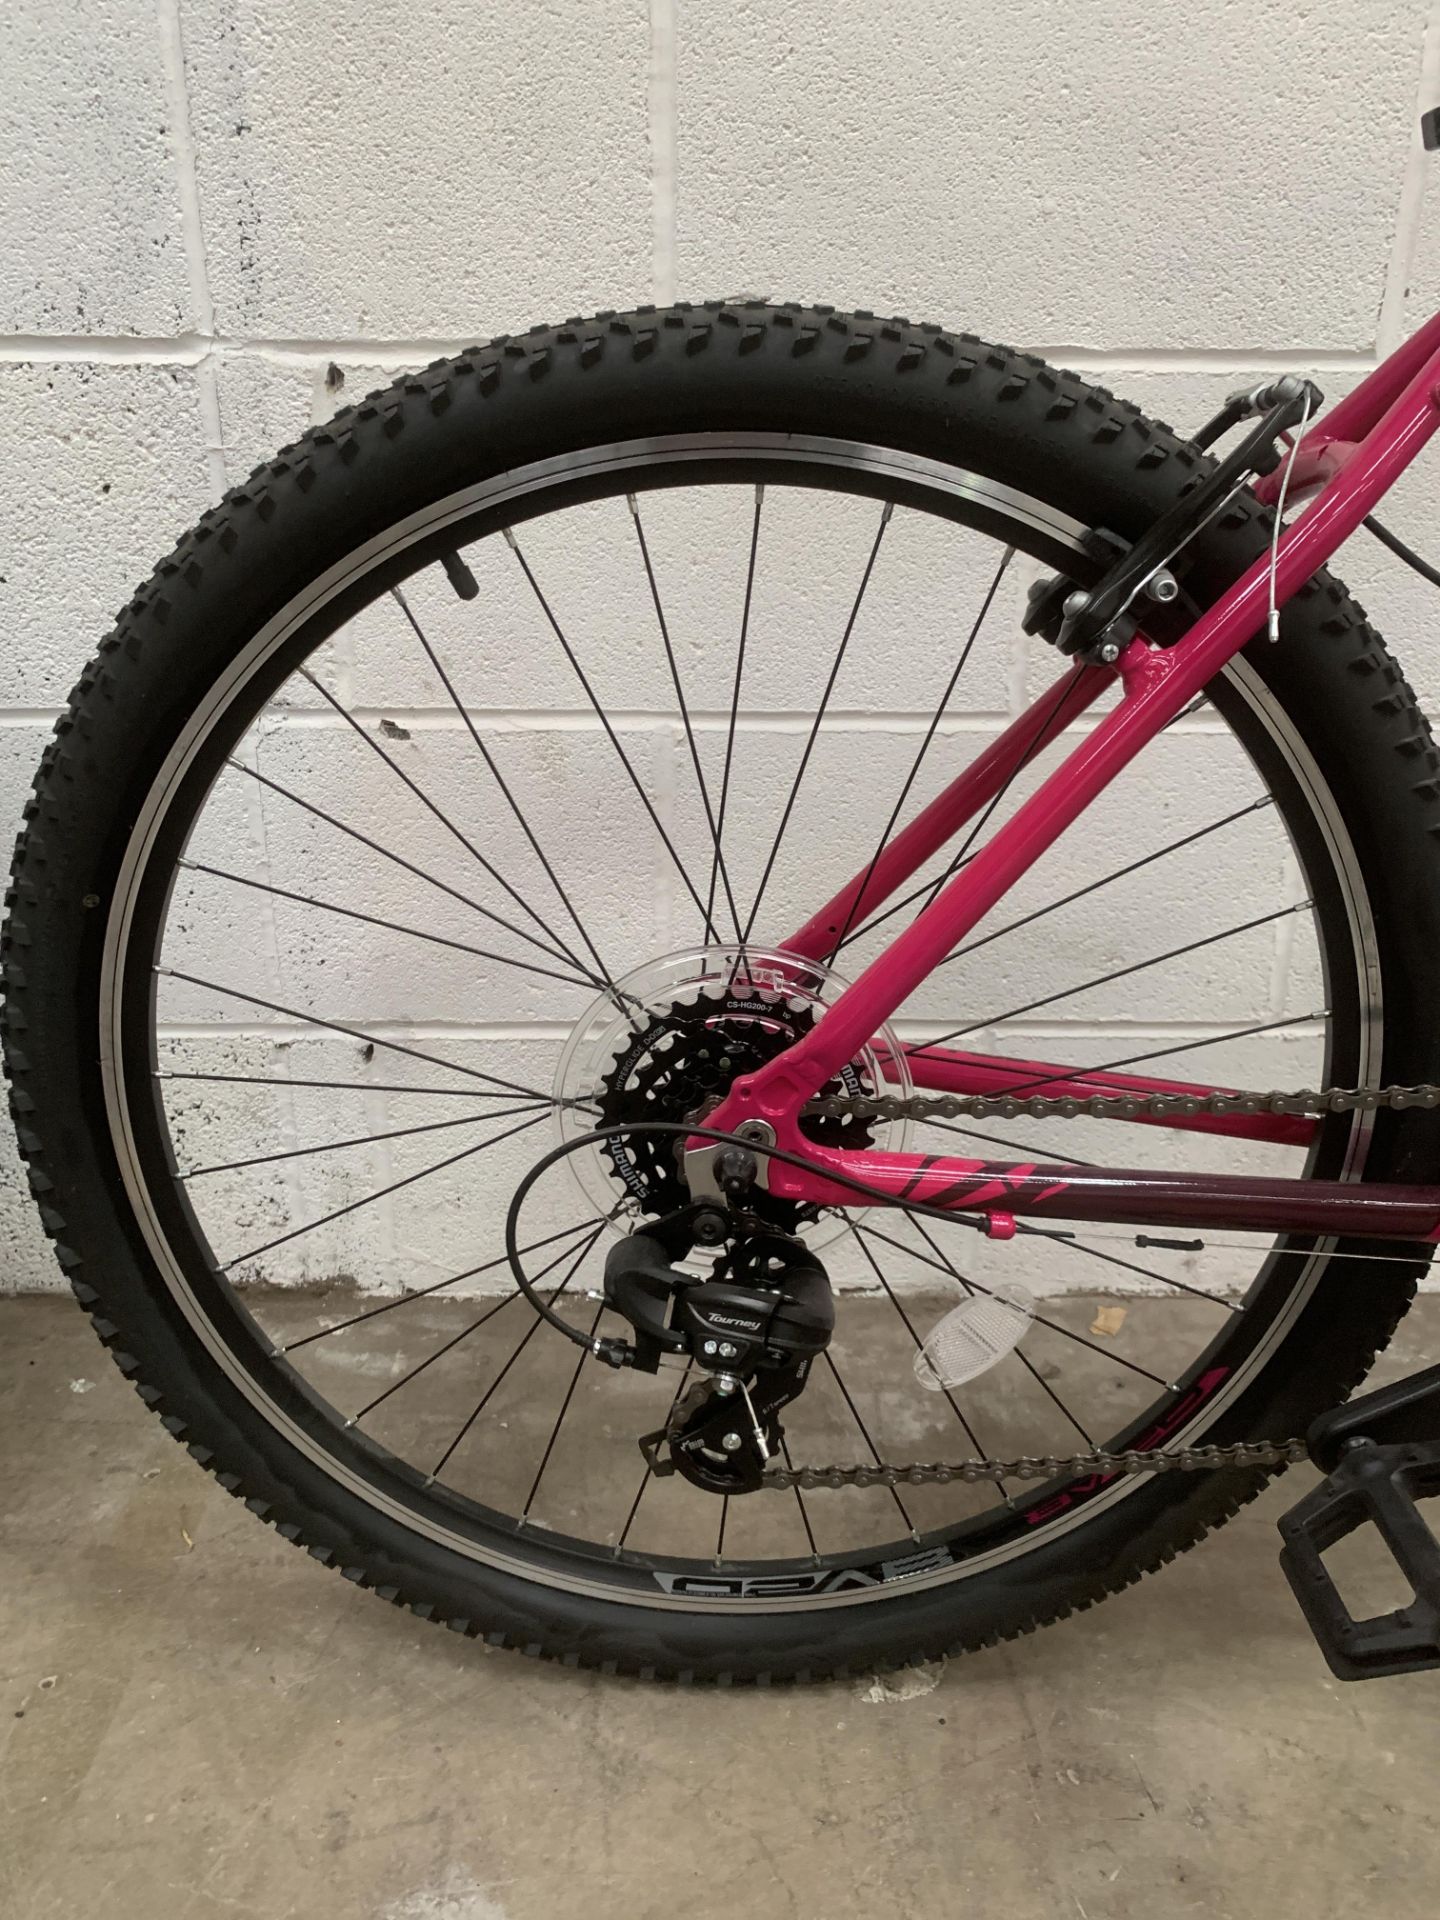 Ridgeback Terrain 2 'Pink' 19" Bicycle. RRP £429 - Image 4 of 5